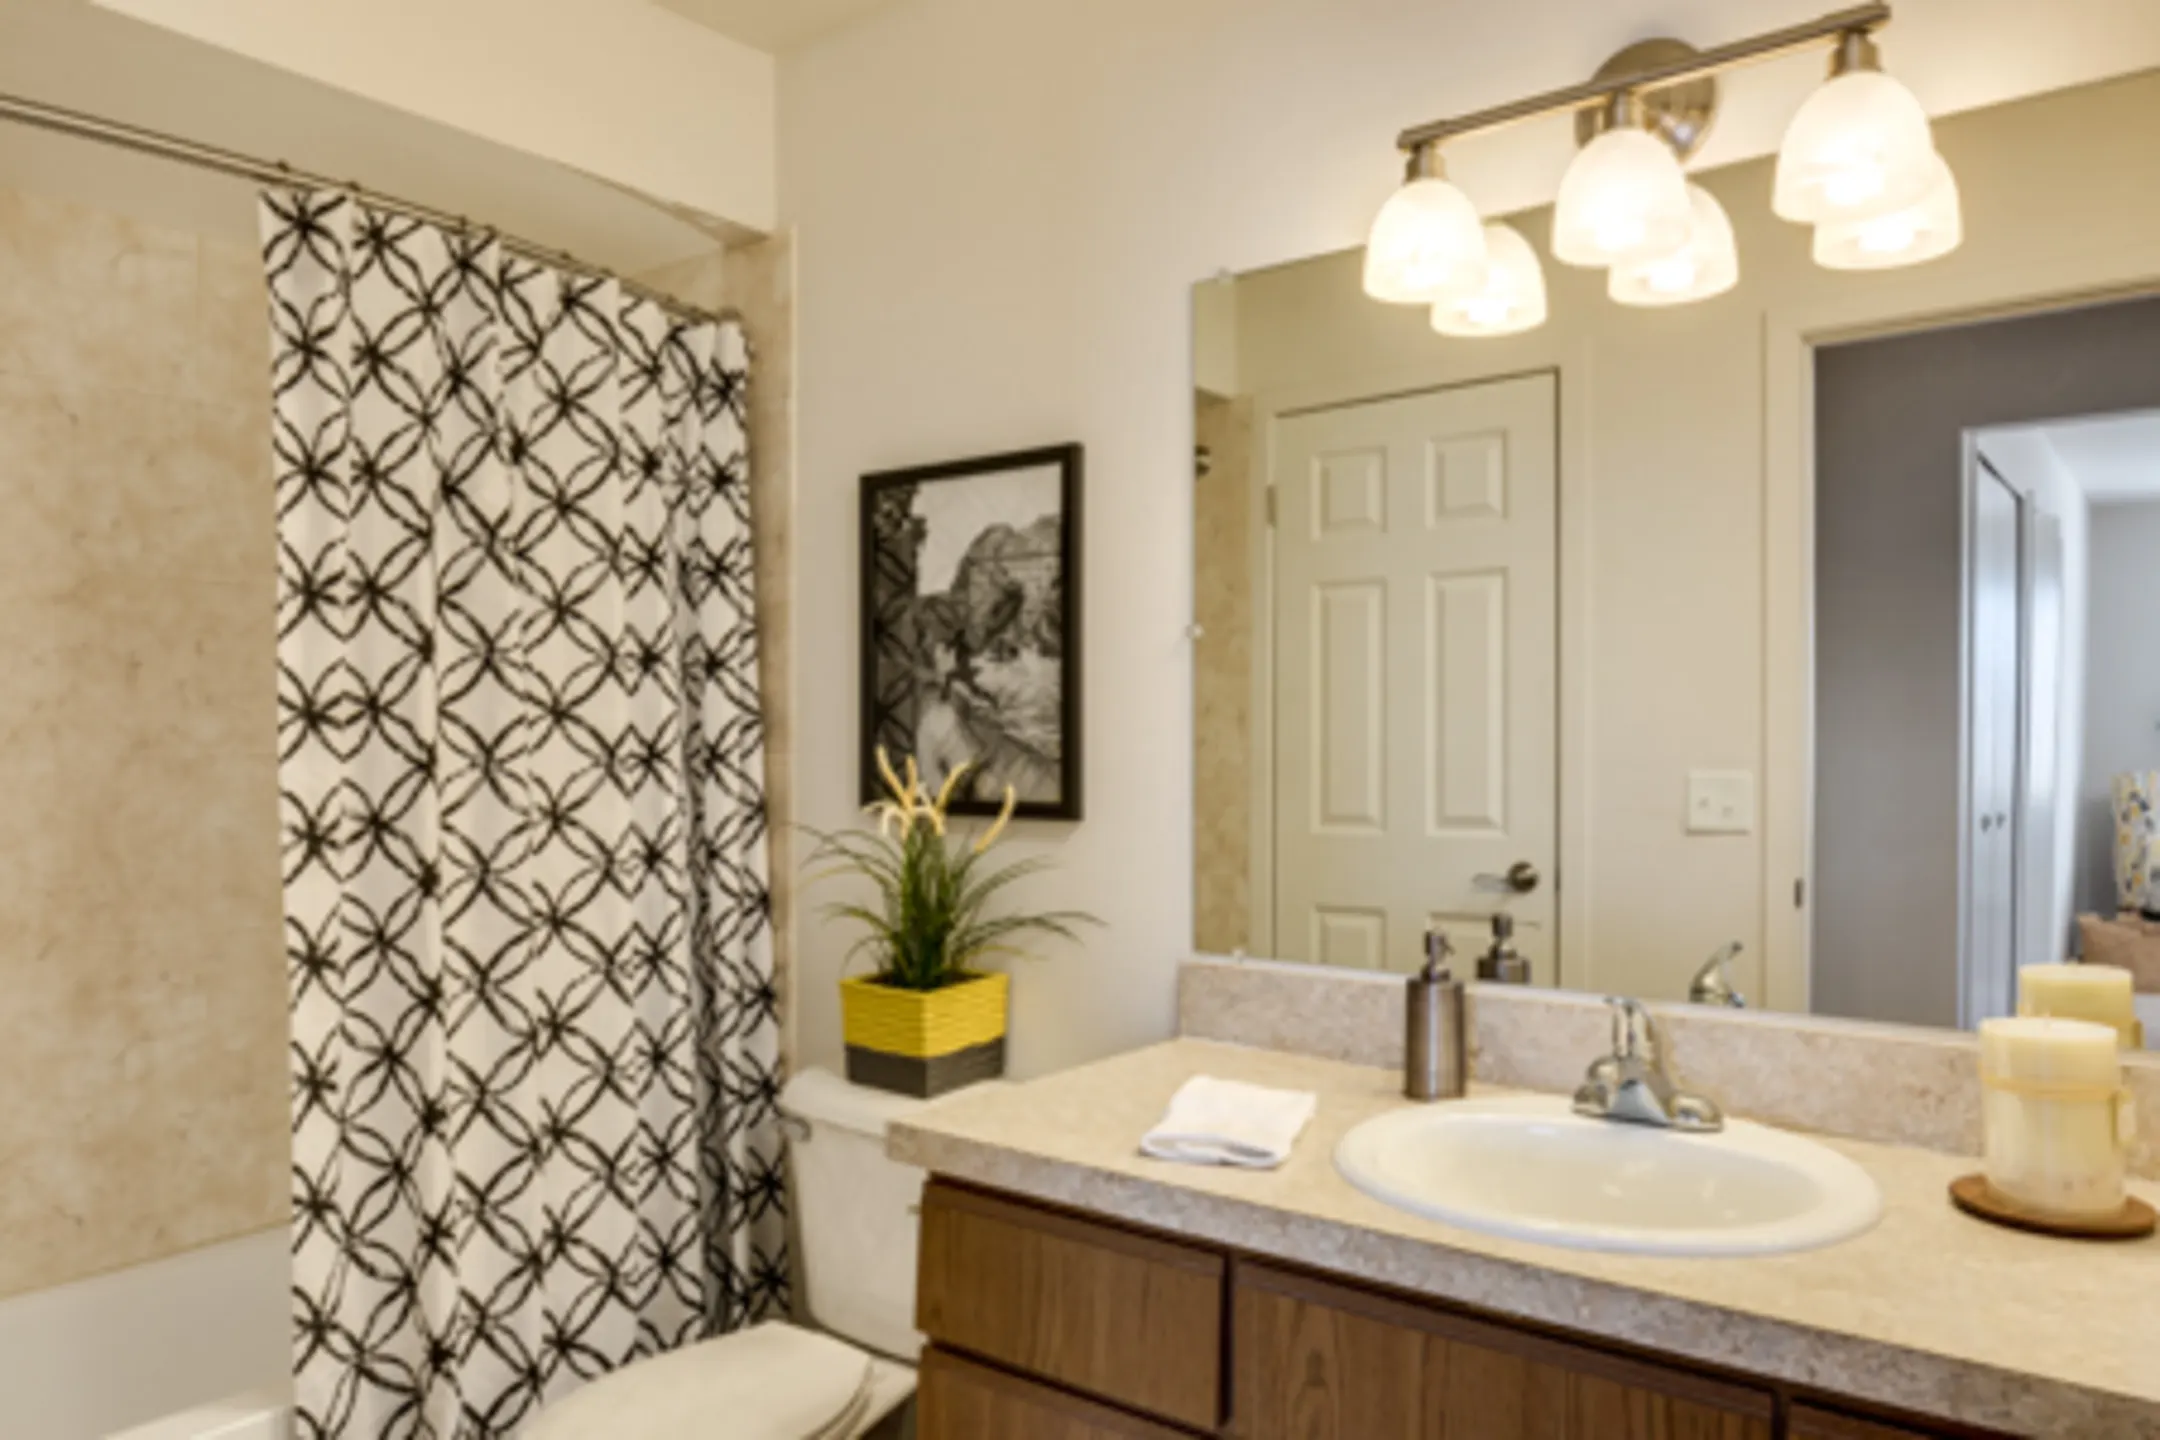 Bathroom - The Trilogy Apartments - Belleville, MI